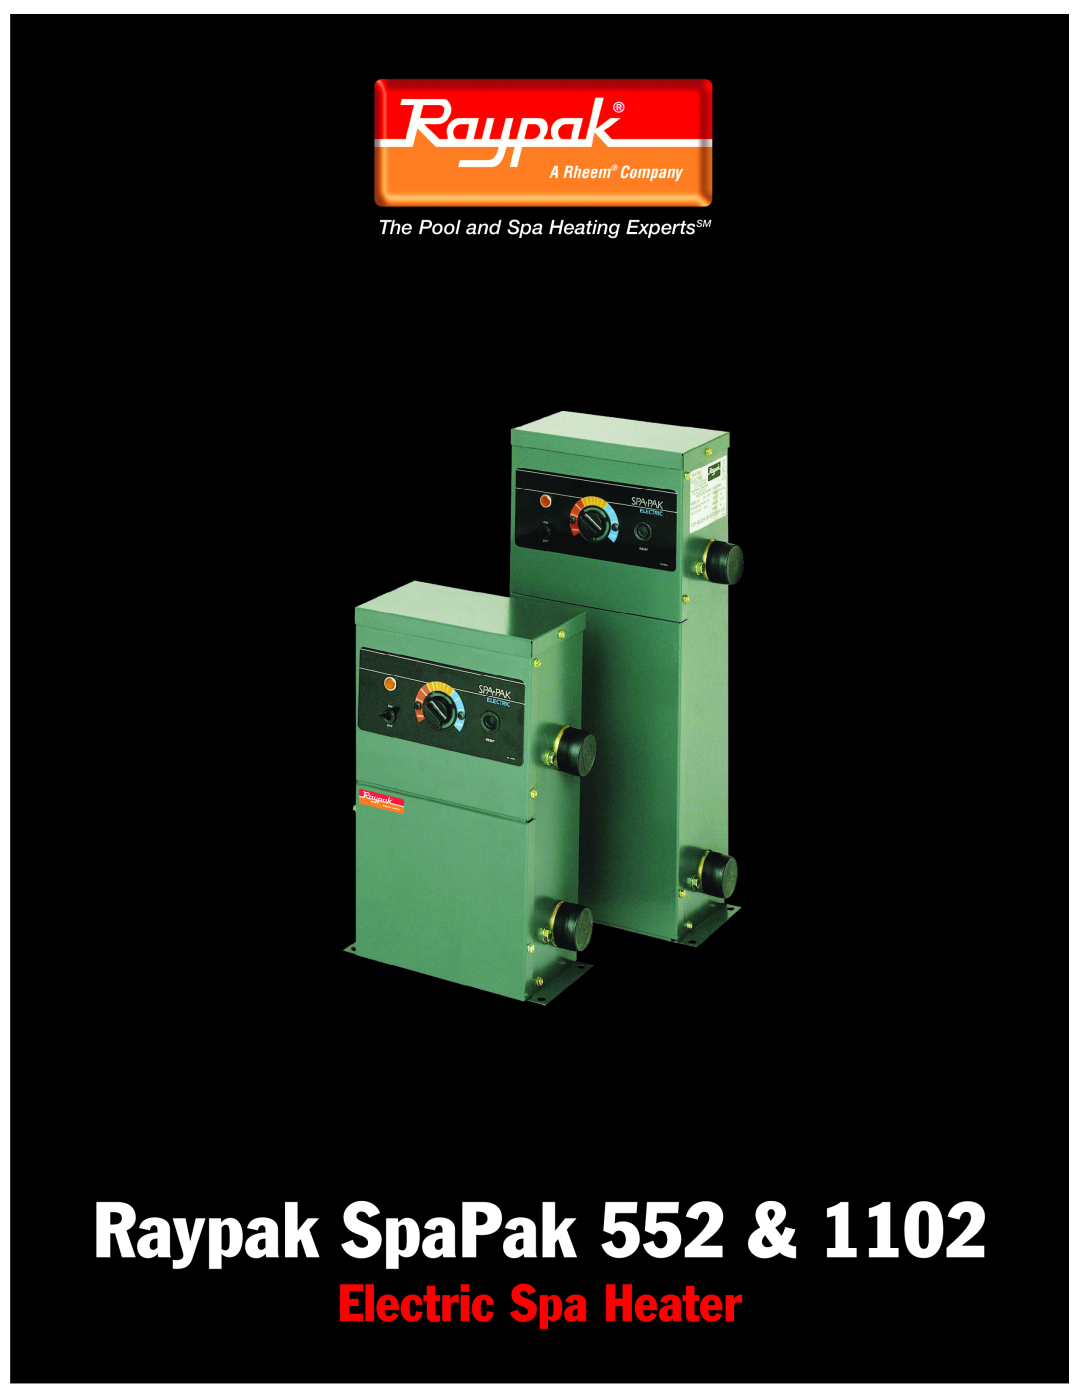 Raypak 552 & 1102 manual Raypak SpaPak, Electric Spa Heater, The Pool and Spa Heating ExpertsSM 